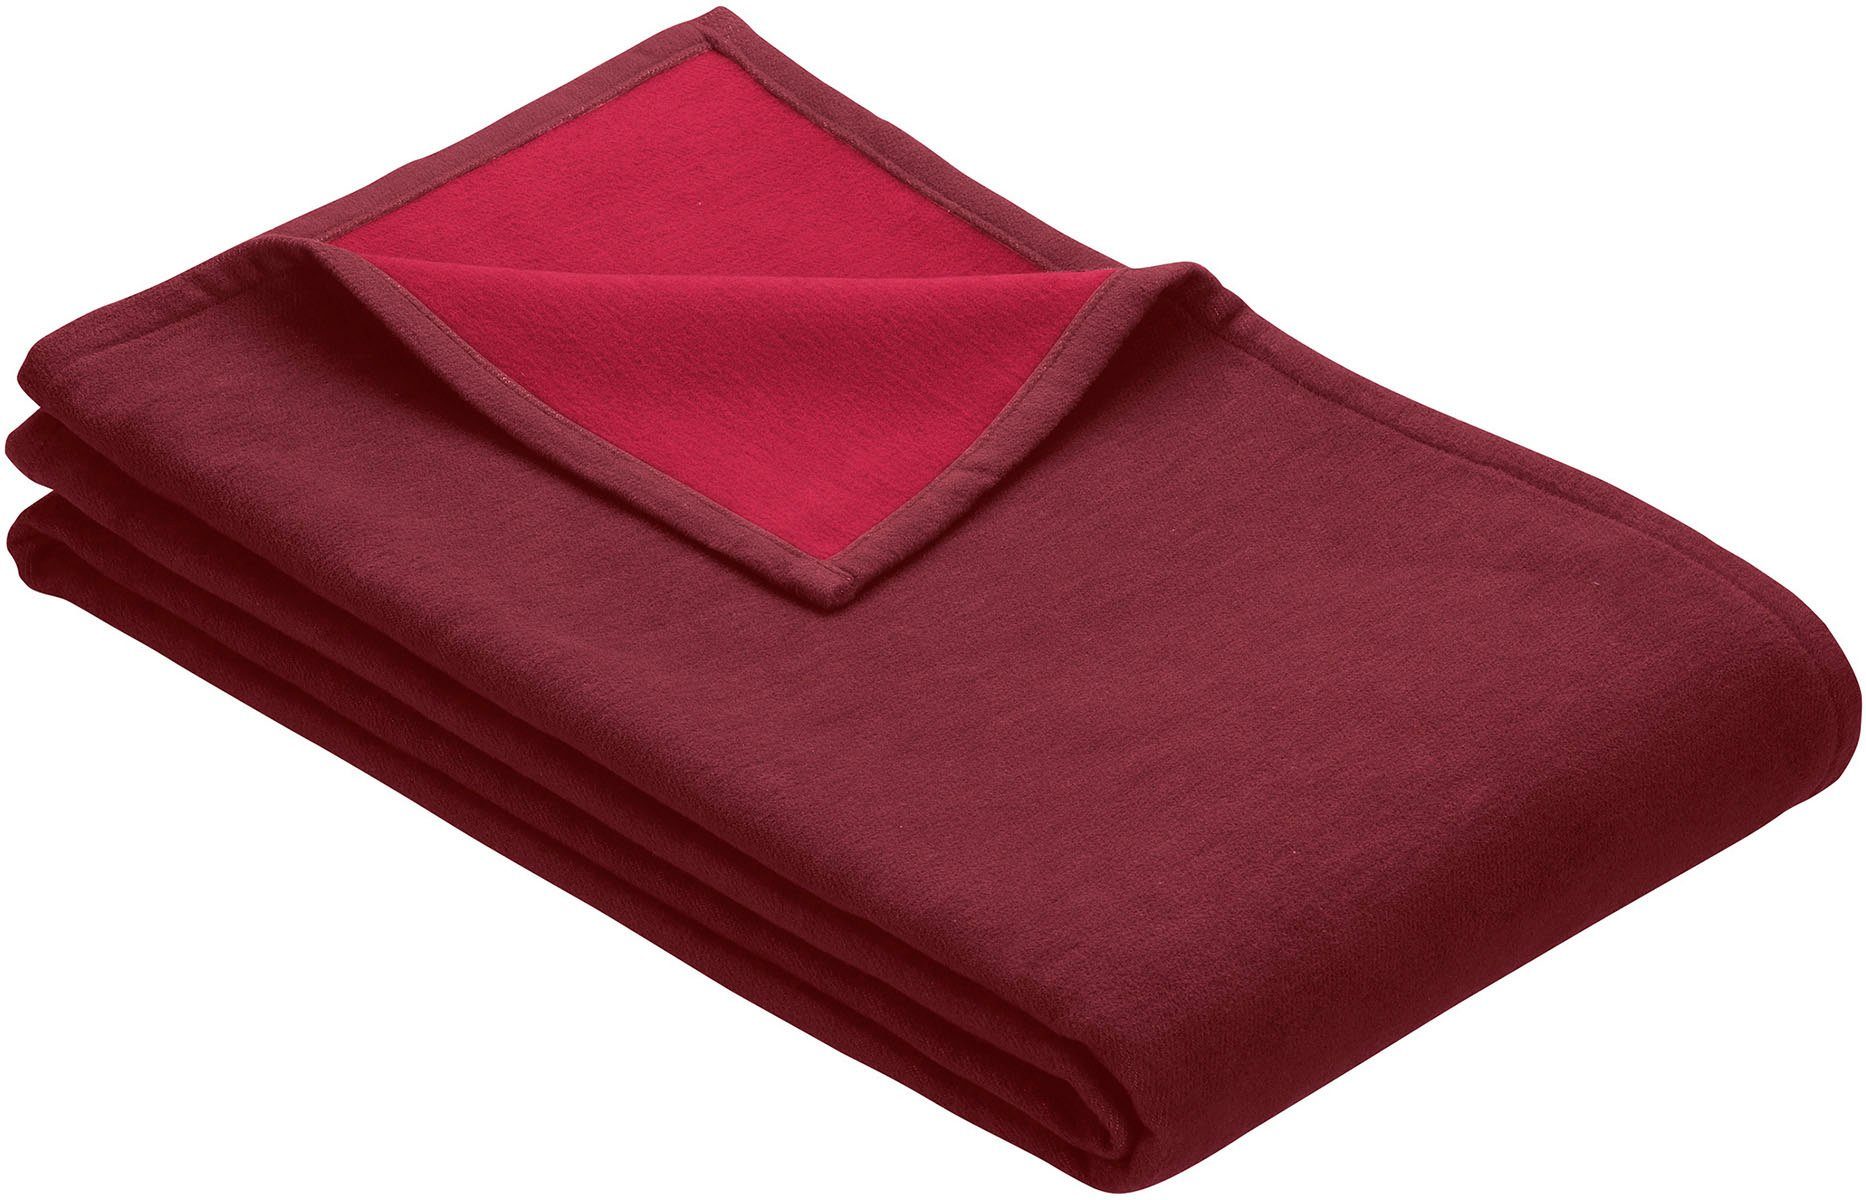 Wohndecke Cotton Pur, IBENA, in trendigen Farben rotbraun/rot